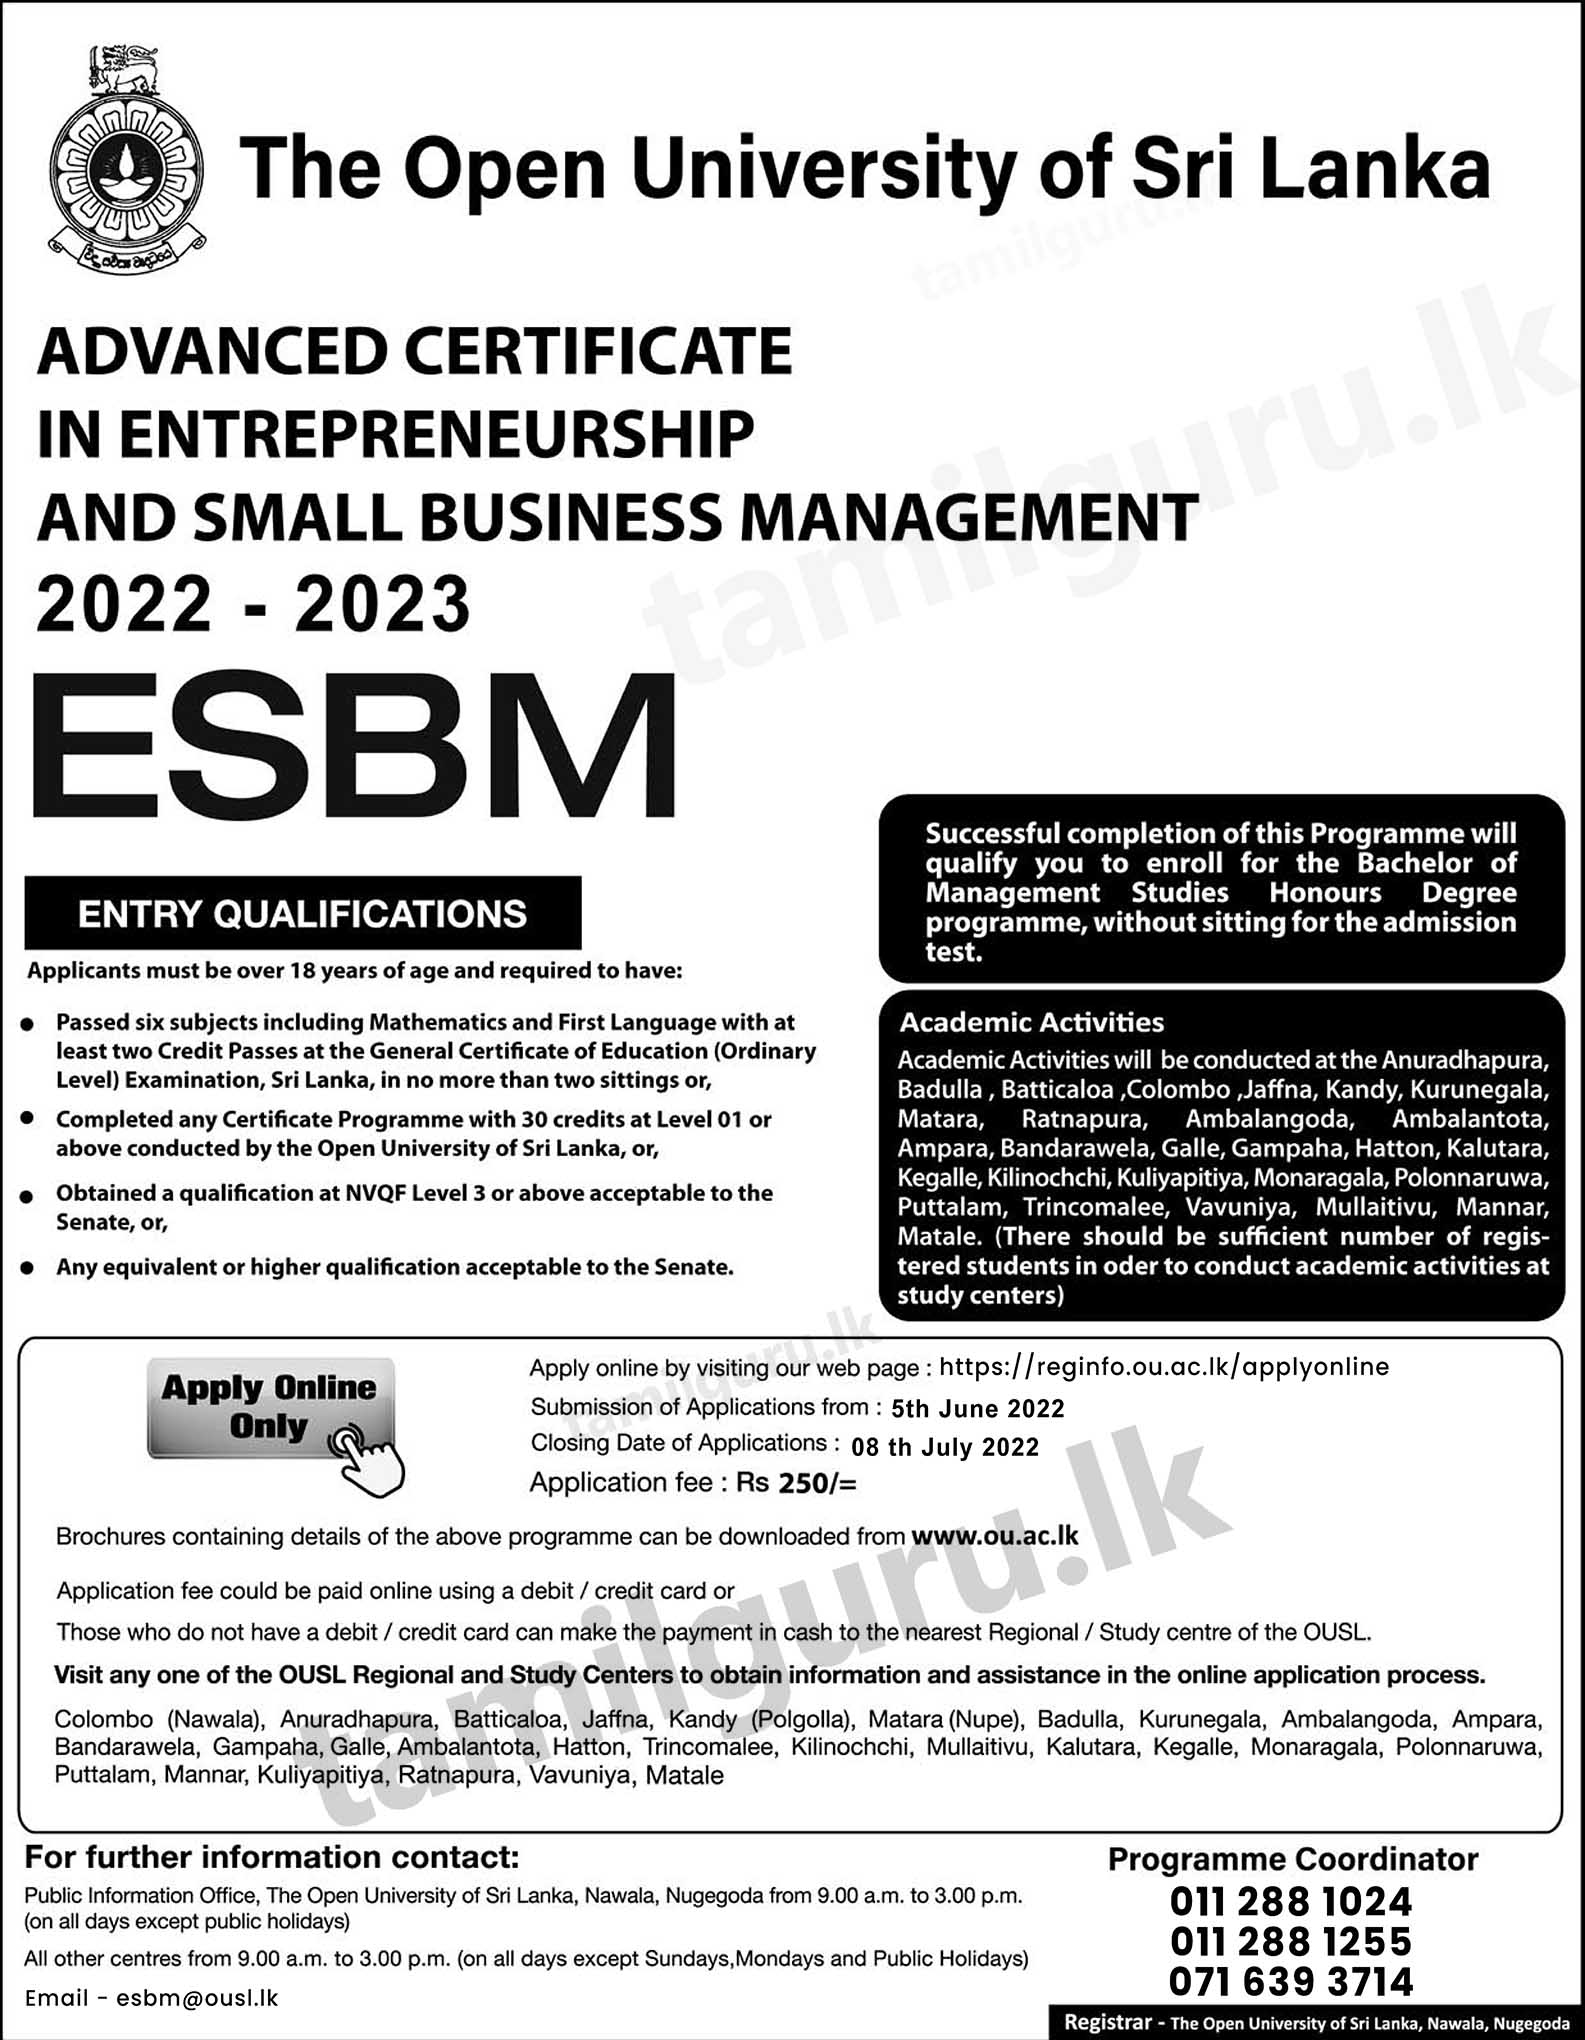 Advanced Certificate in Entrepreneurship and Small Business Management (ESBM) Course 2022/2023 - Open University of Sri Lanka (OUSL)